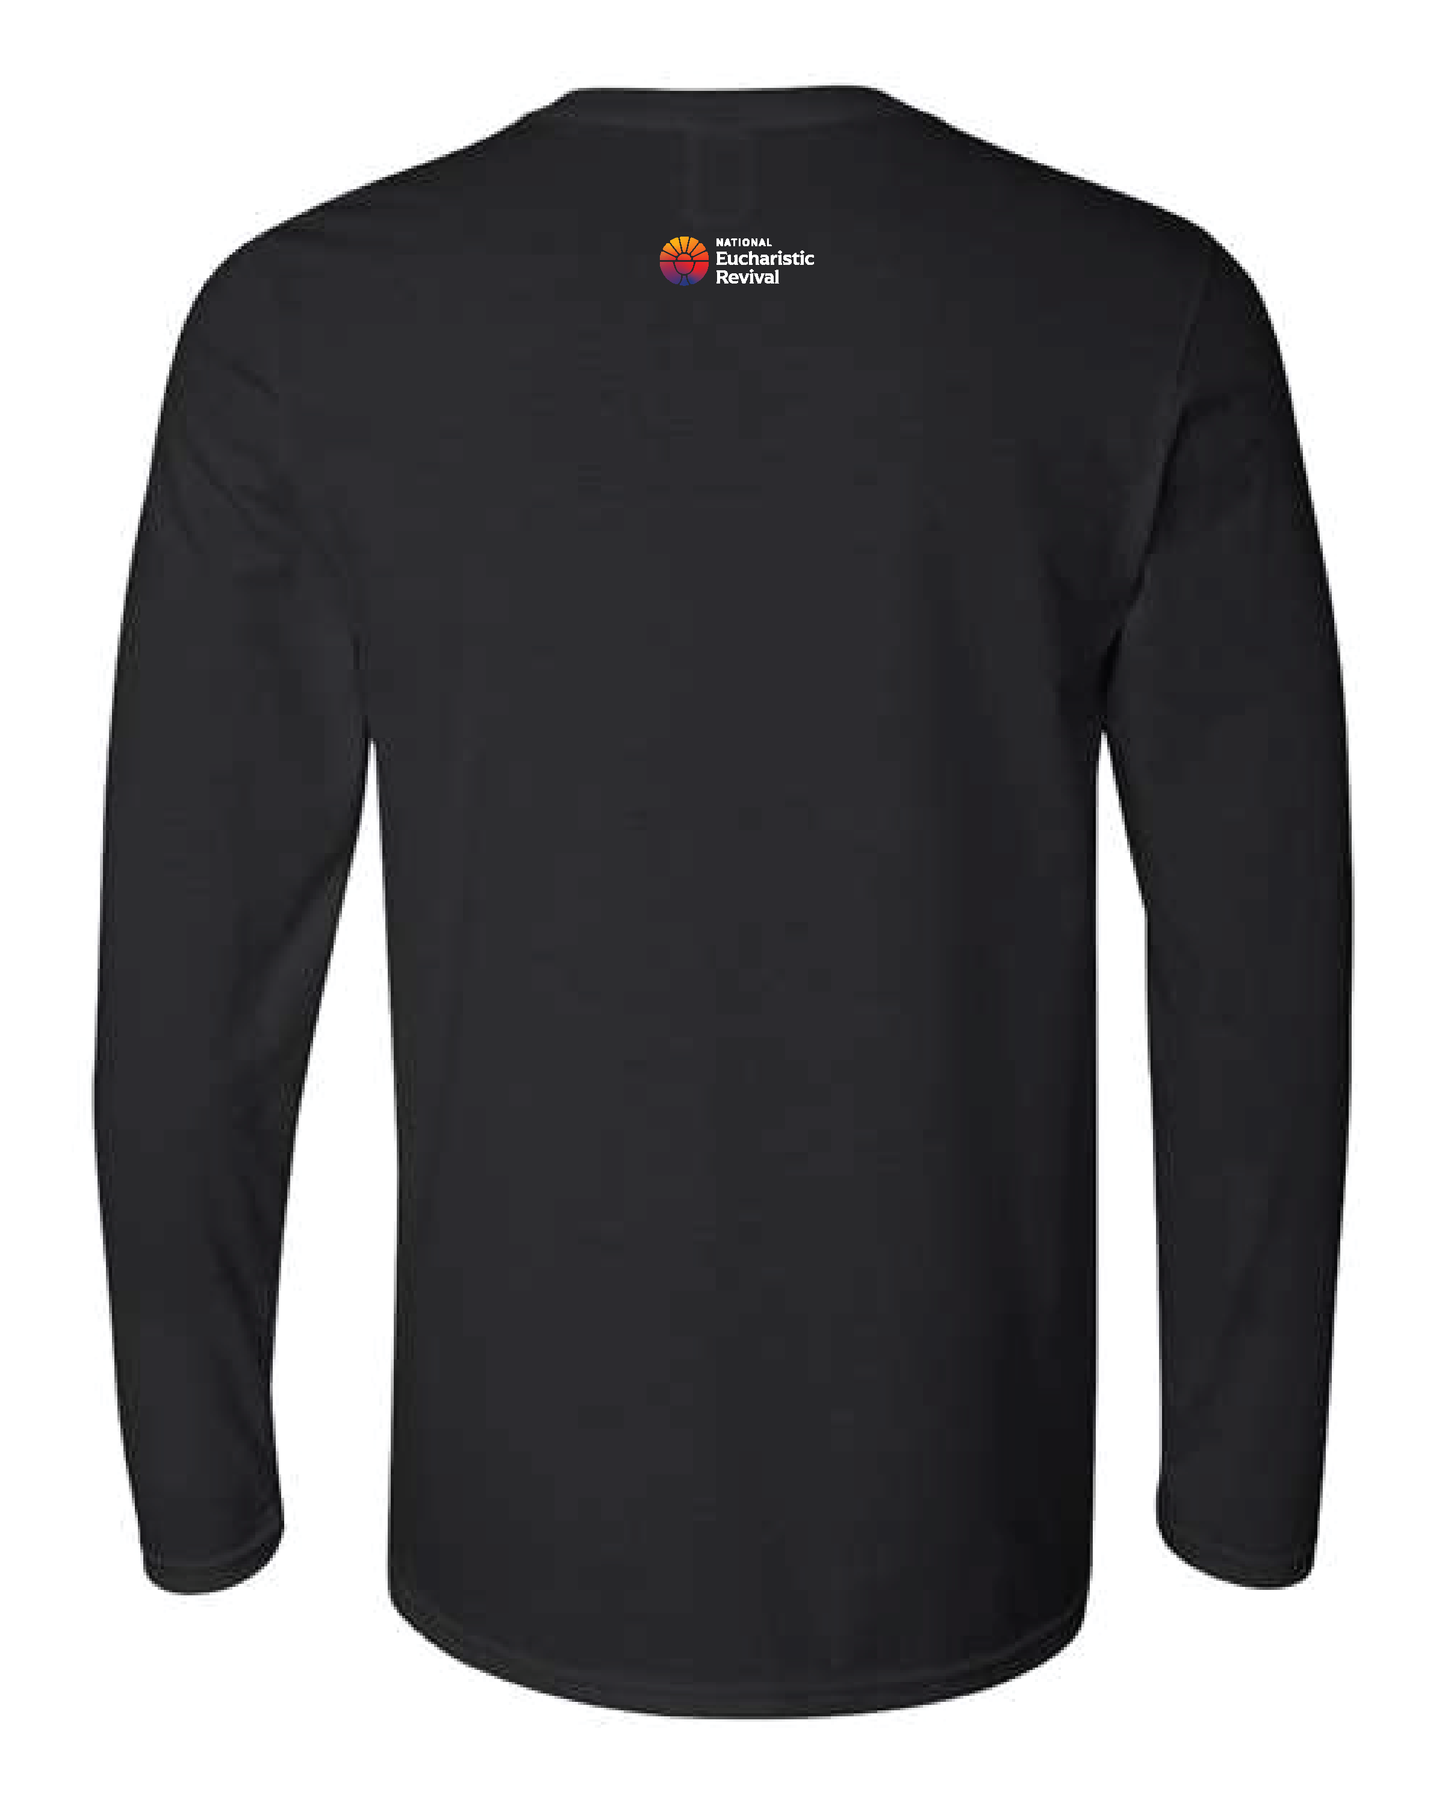 Retro Revival Long Sleeve T Shirt